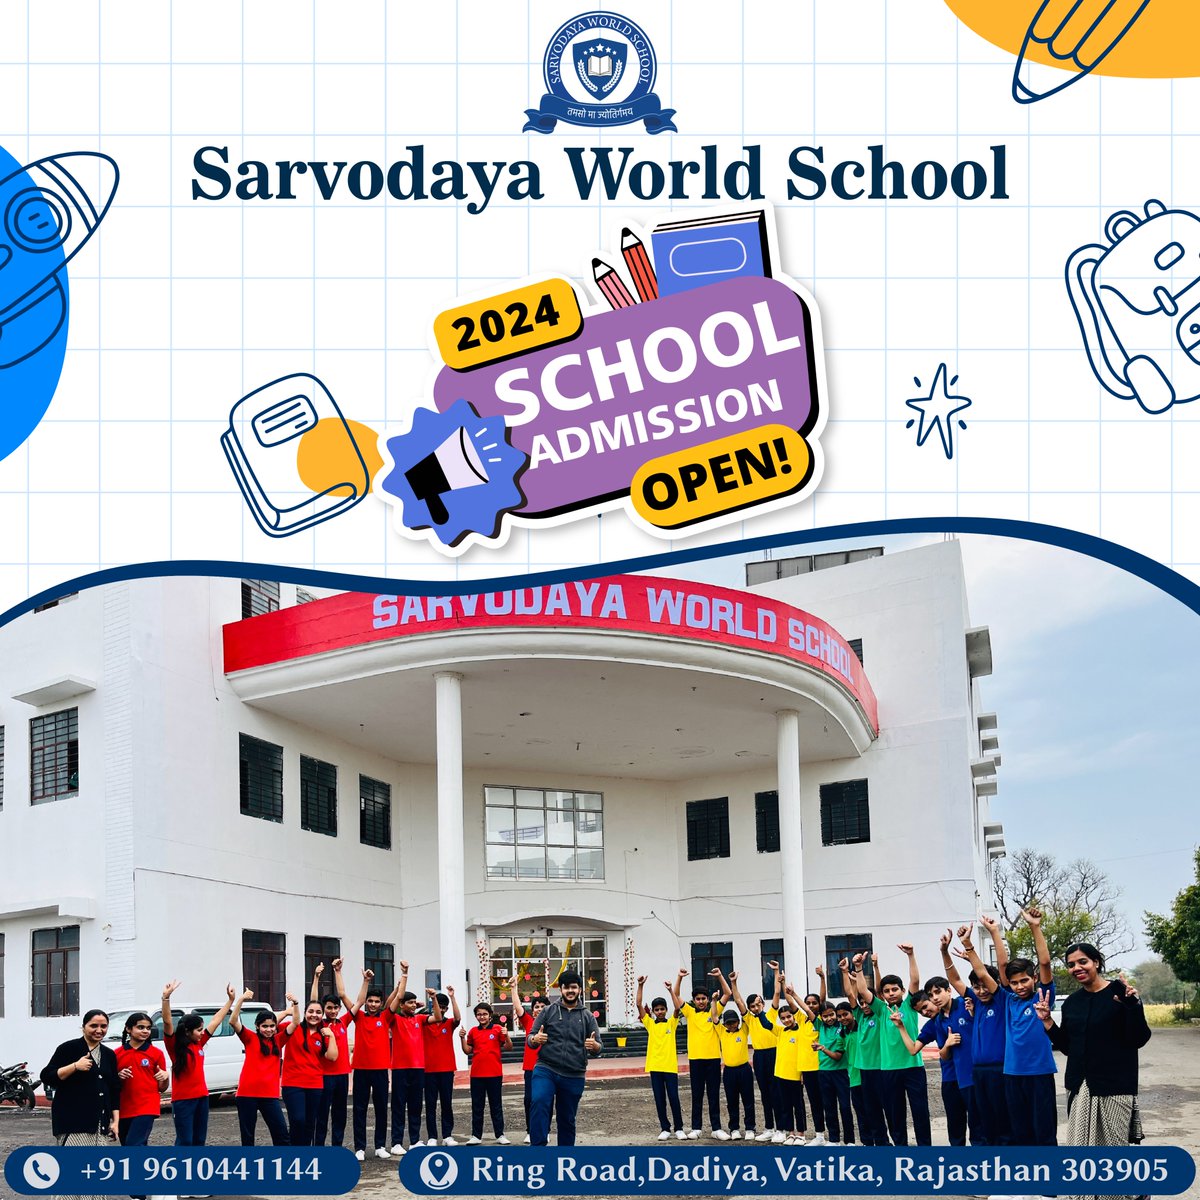 Admission Open for 2024-25 at Sarvodaya World School, Jaipur  Enroll Now! #admissionsopen #admission #rgmi #school #kg #jaipur #education #admissions #students #schools #sarvodayaworldschool #studyabroad #india #leadinguniversity #success #career #future